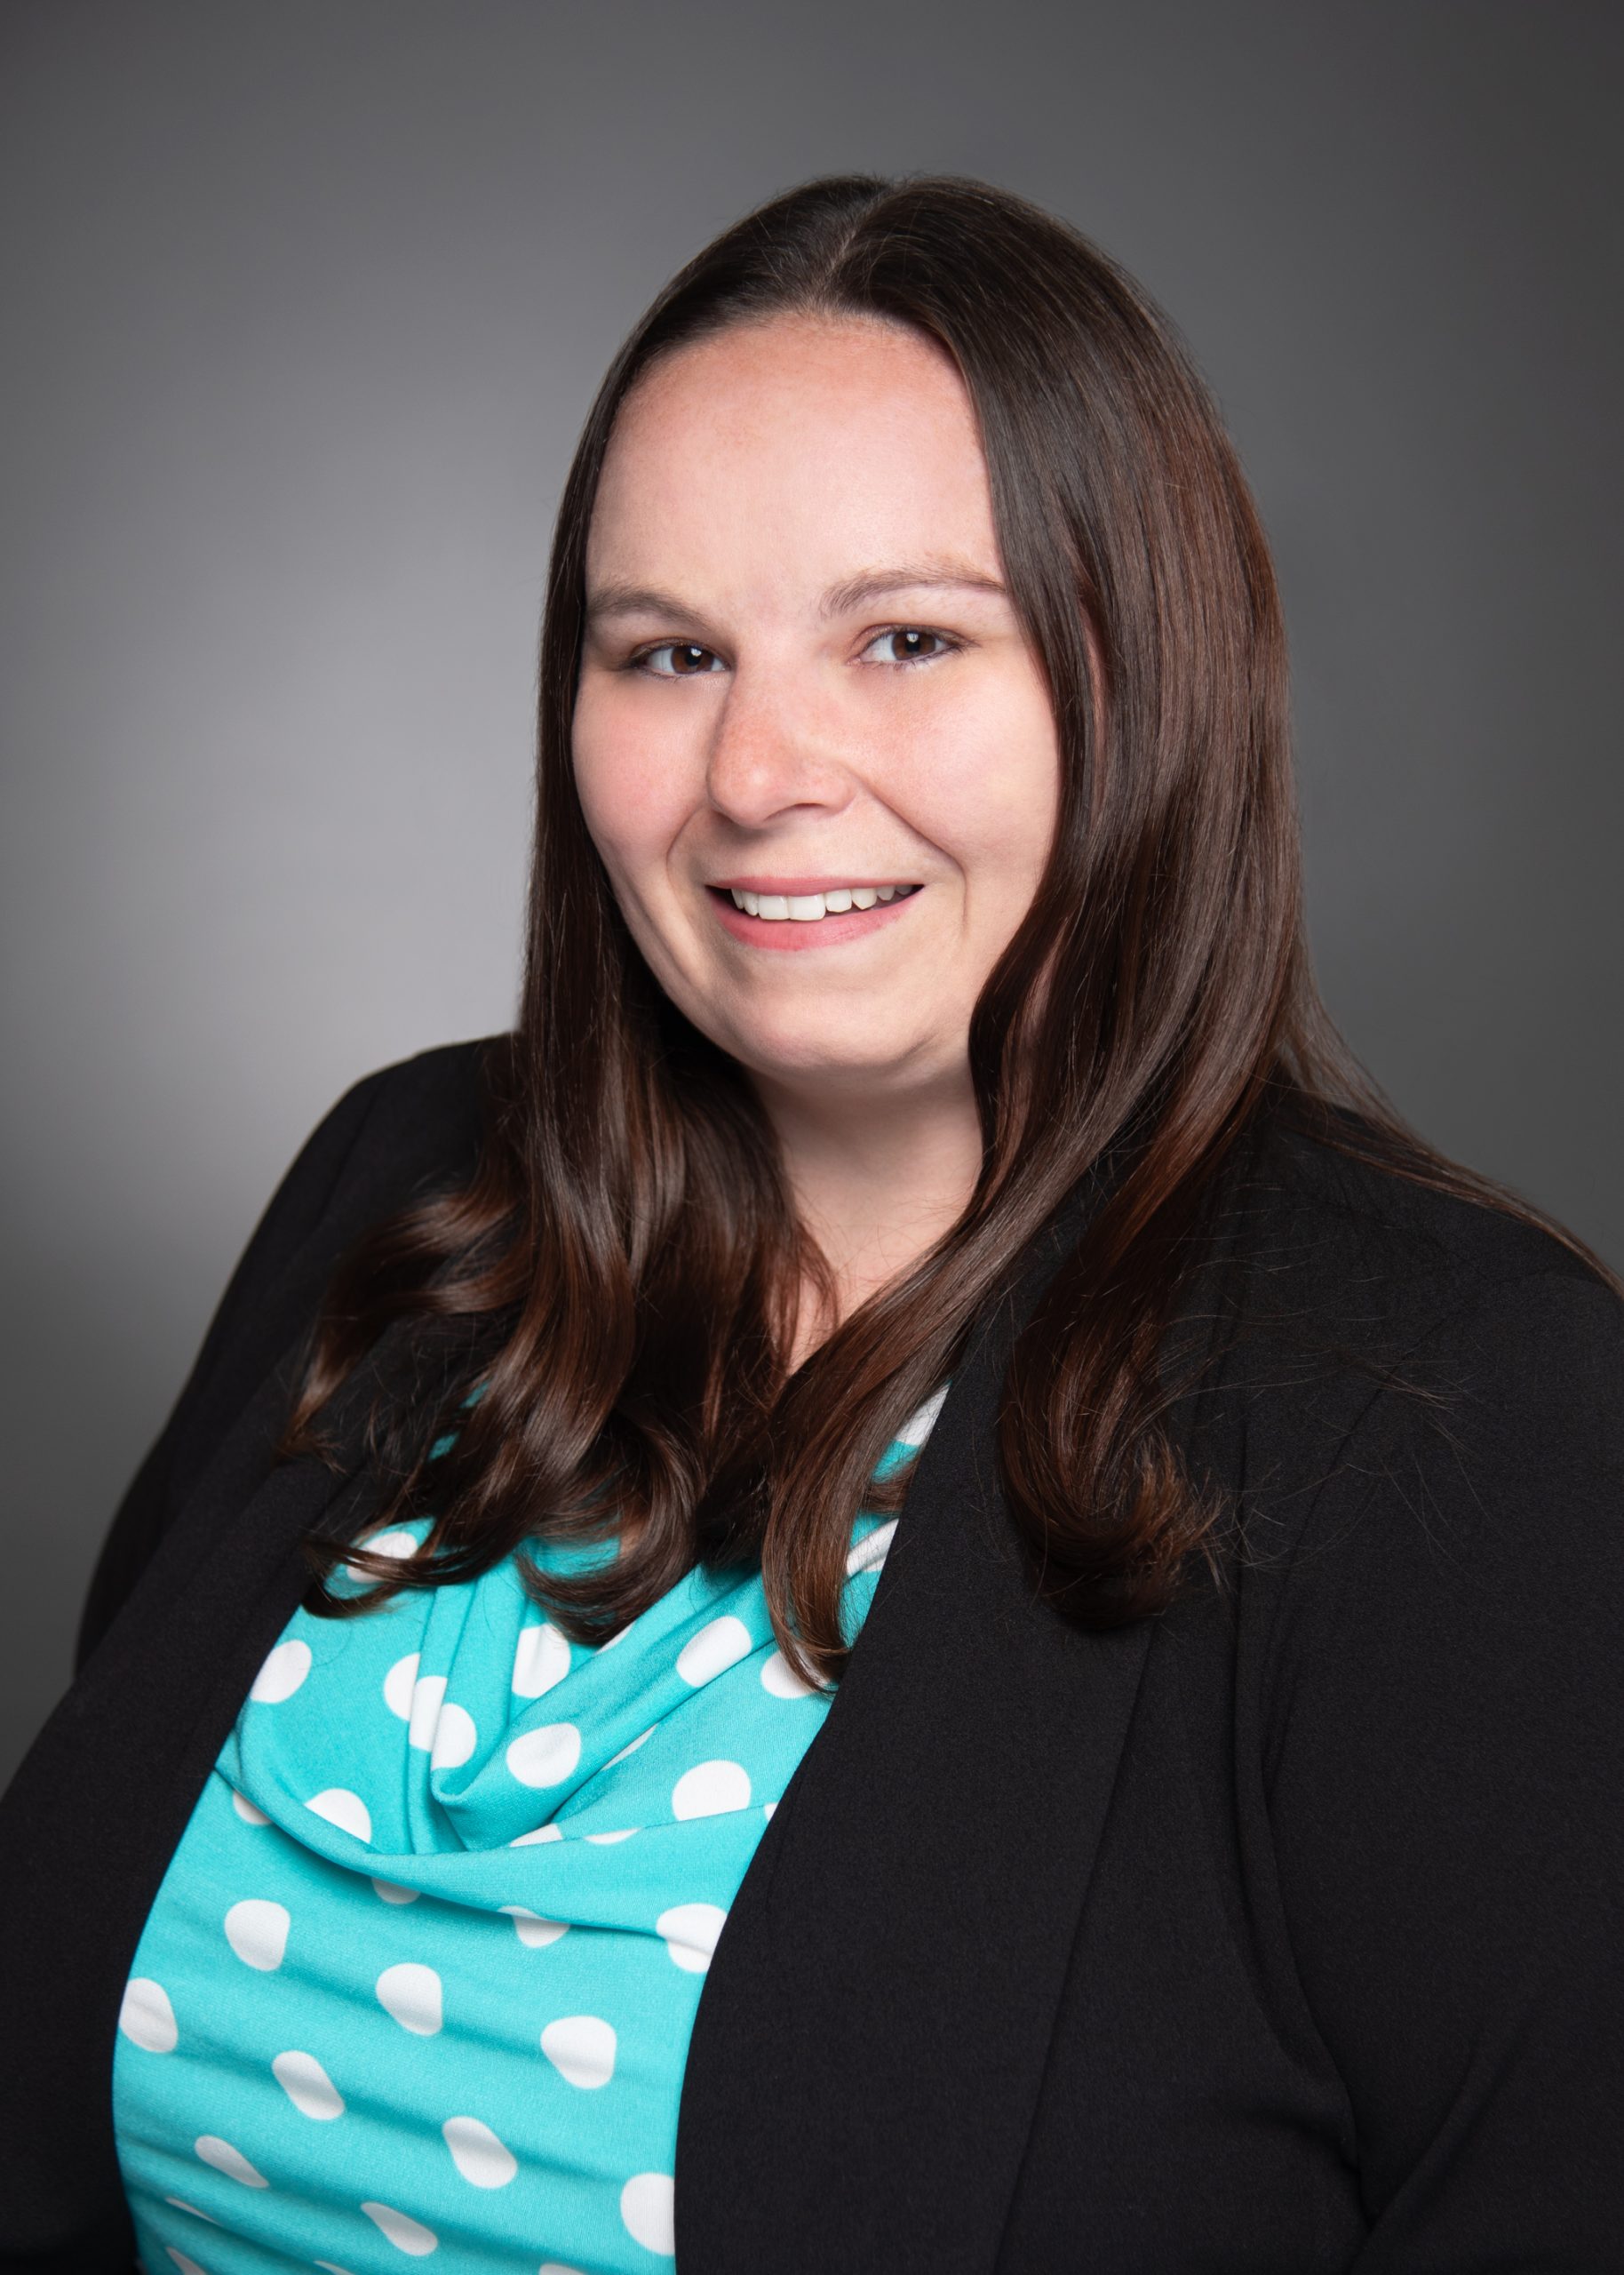 professional headshot of Stephanie Lowry, Accounting Associate, wearing a polka dot blouse and blazer